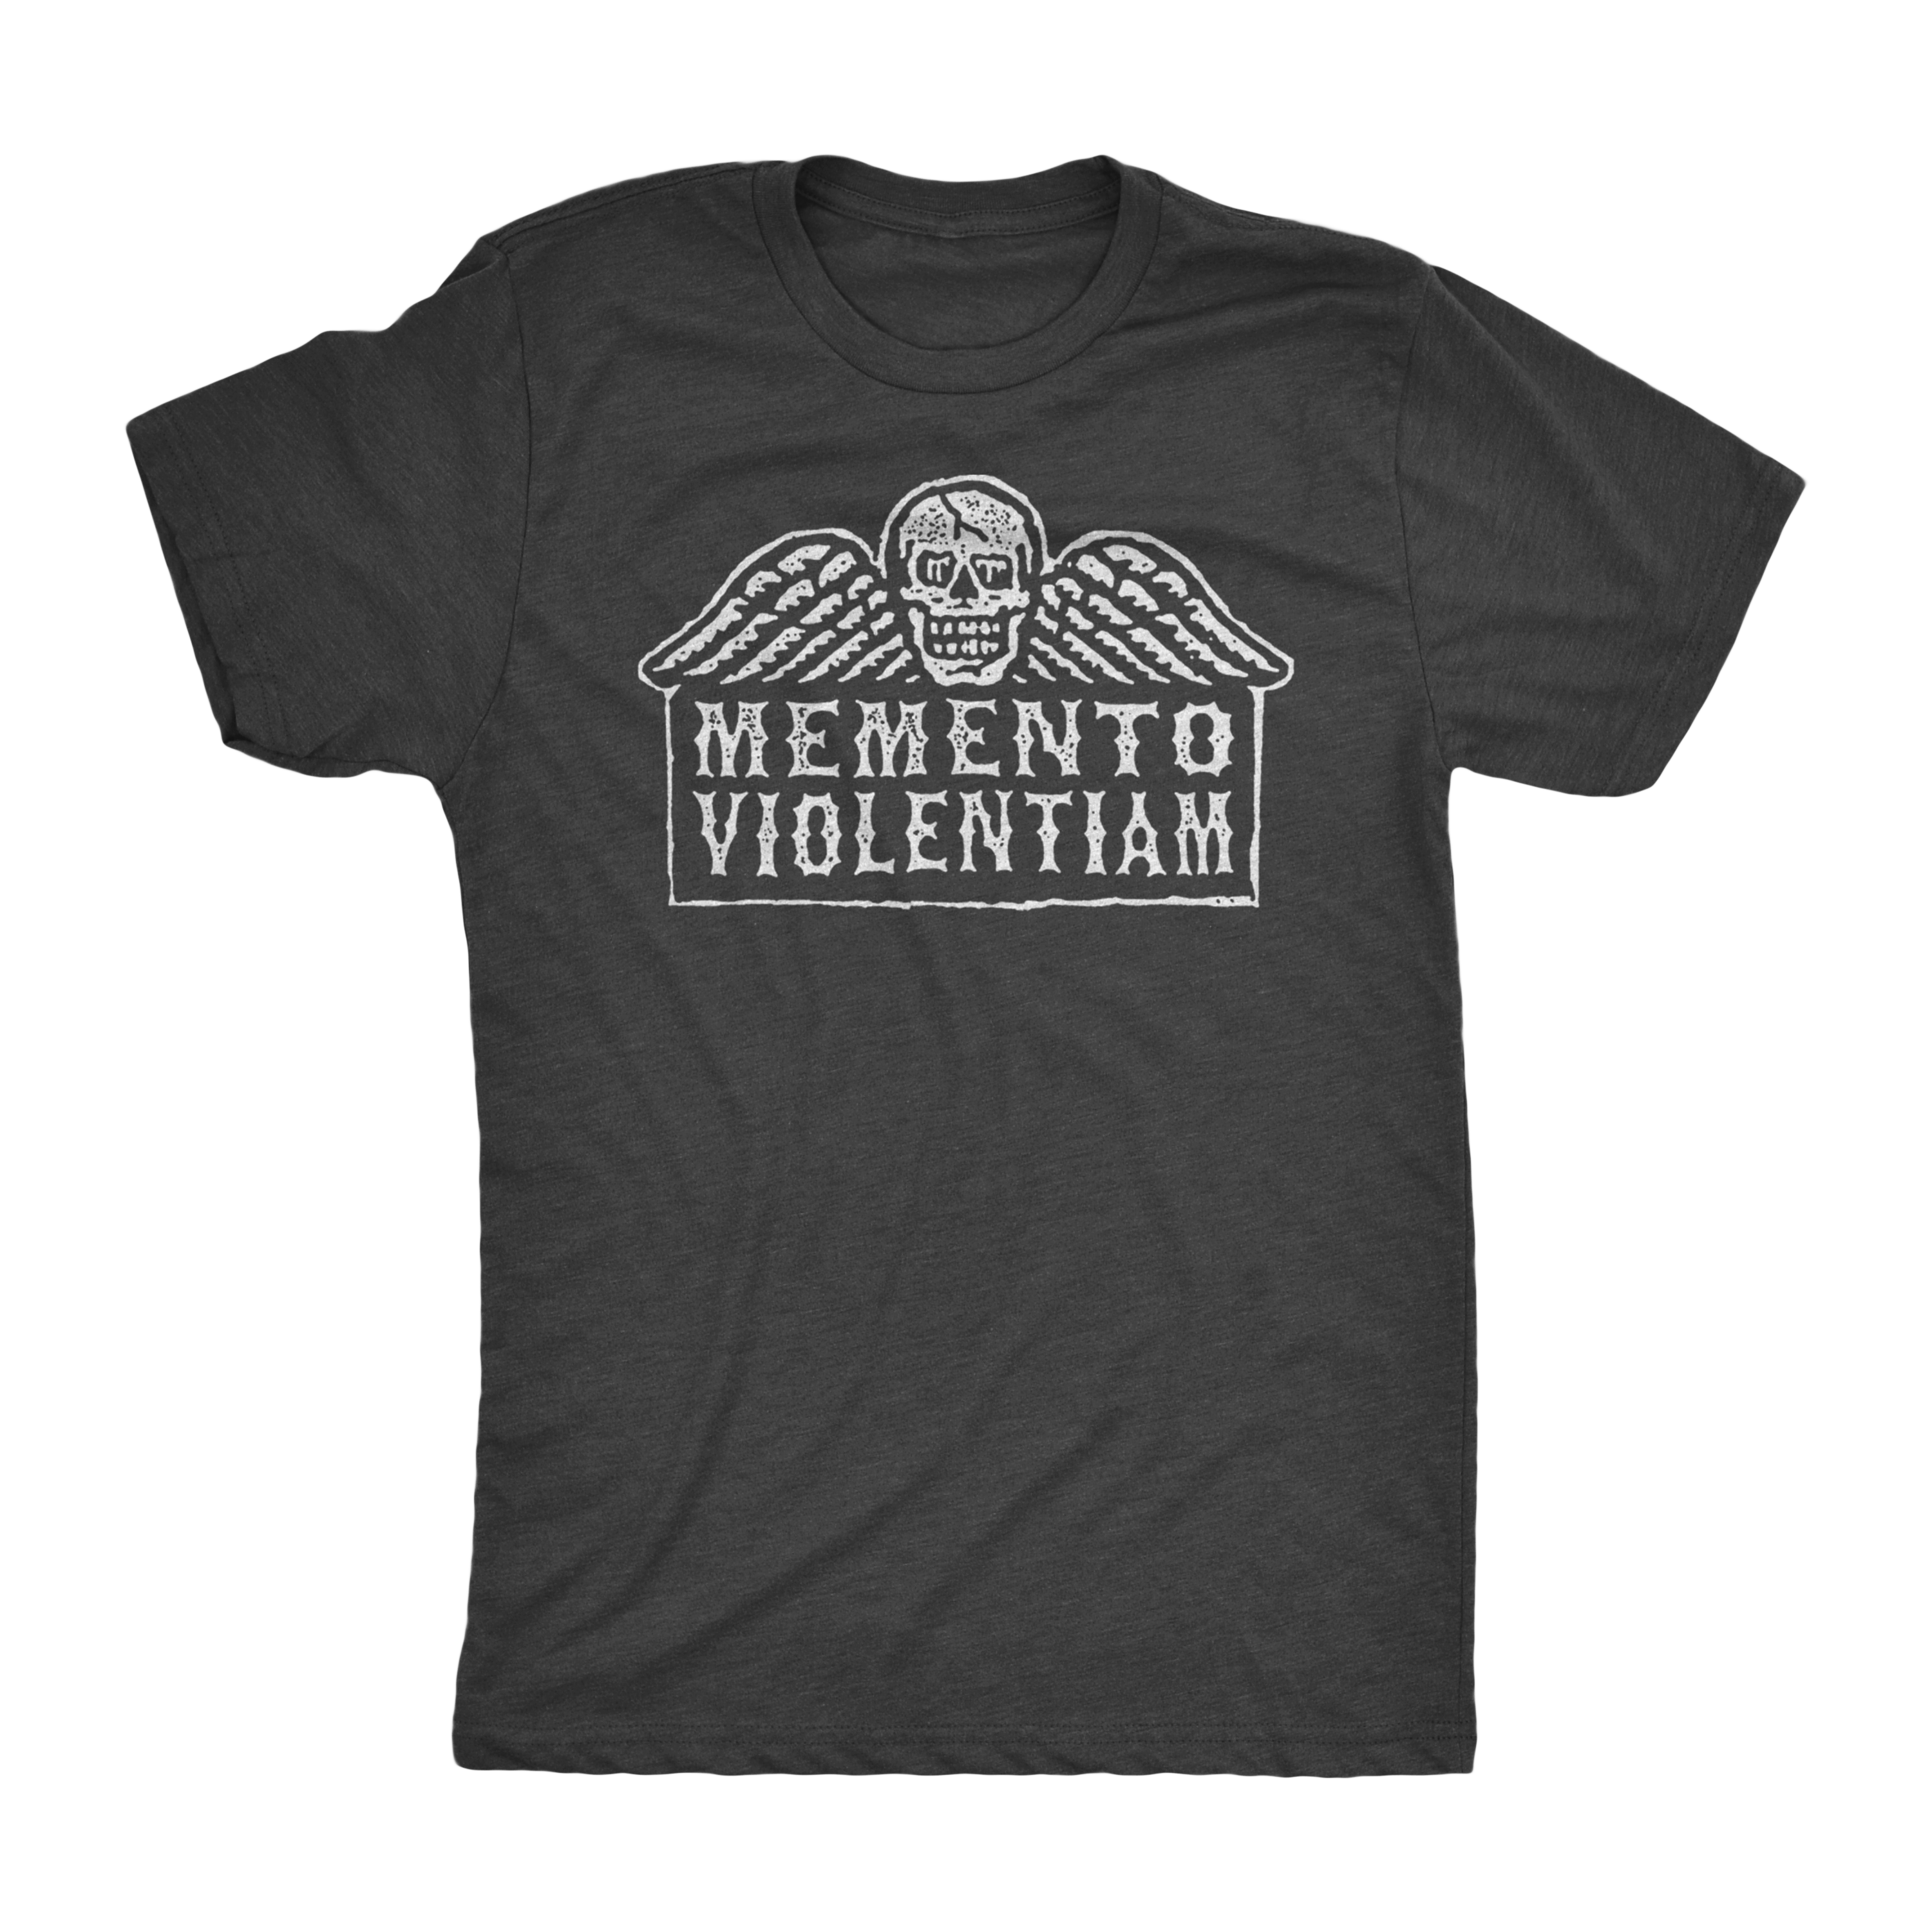 Remember Violence Shirt